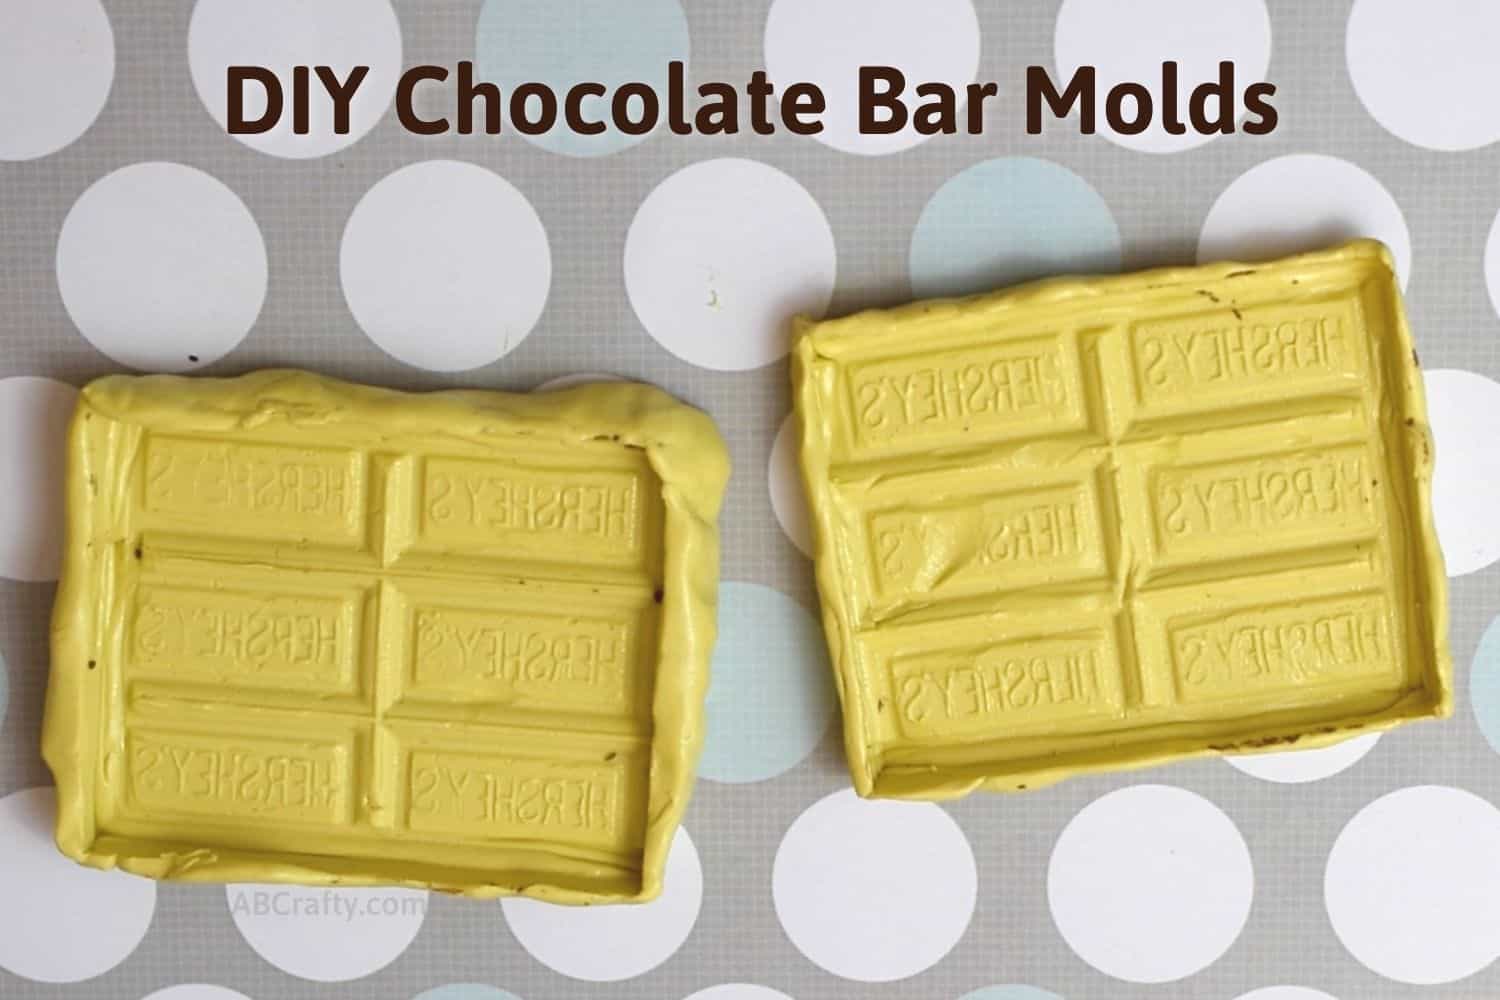 Classic Choco Bar silicone mold